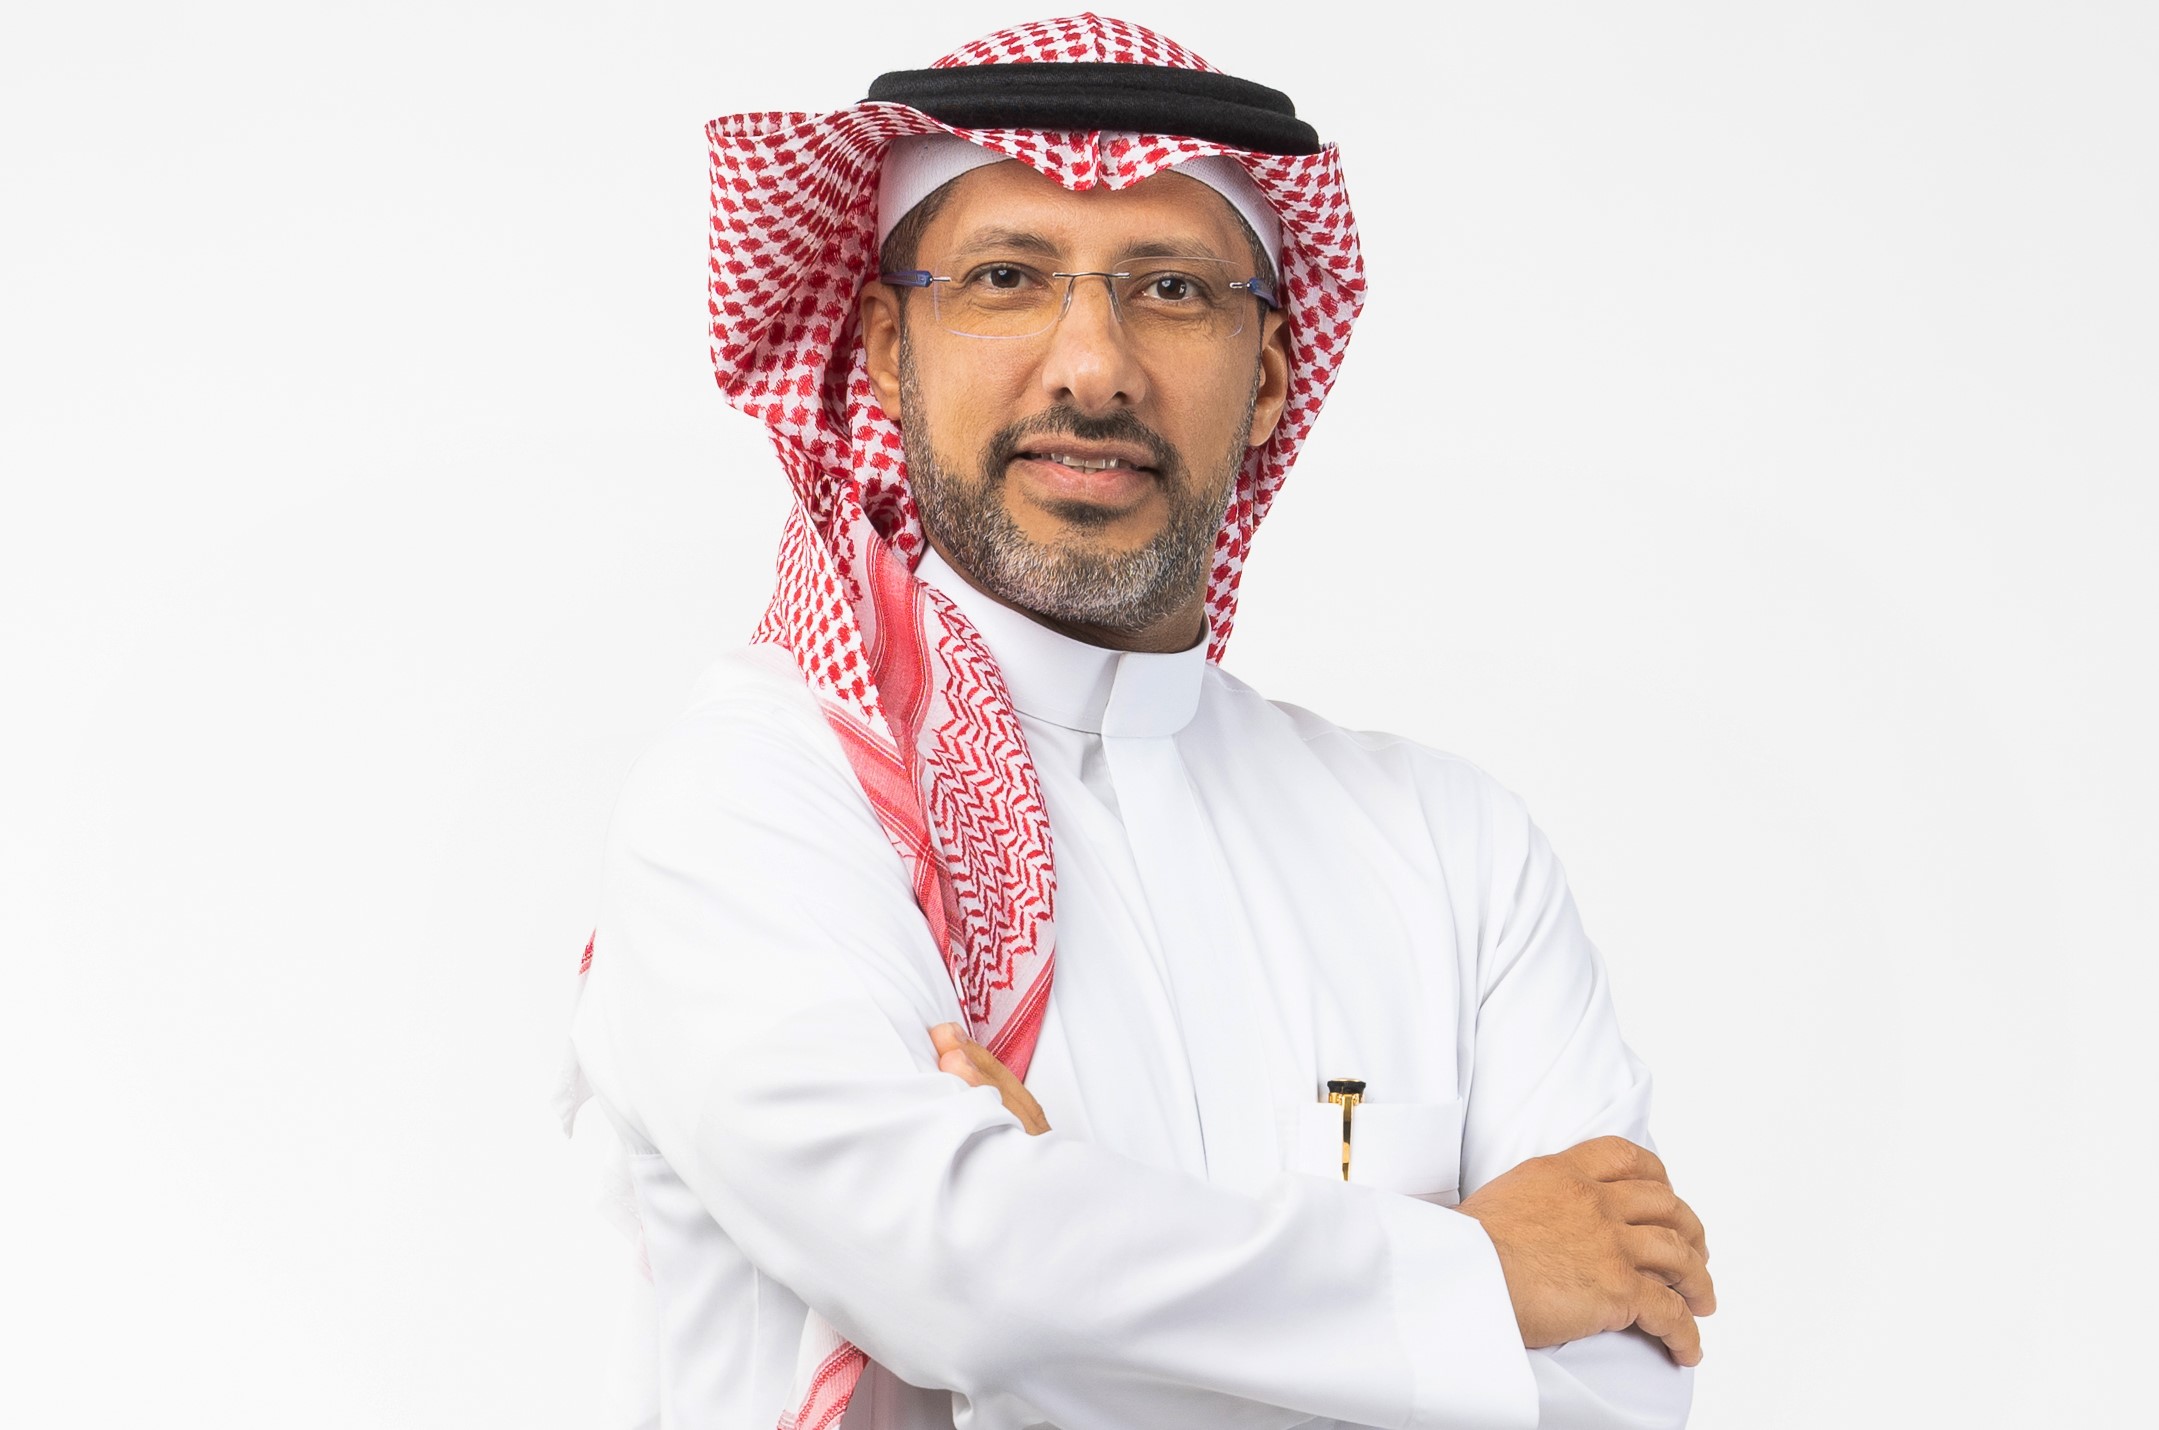 Mr. Abdulsalam Mohammad Al-Jabr